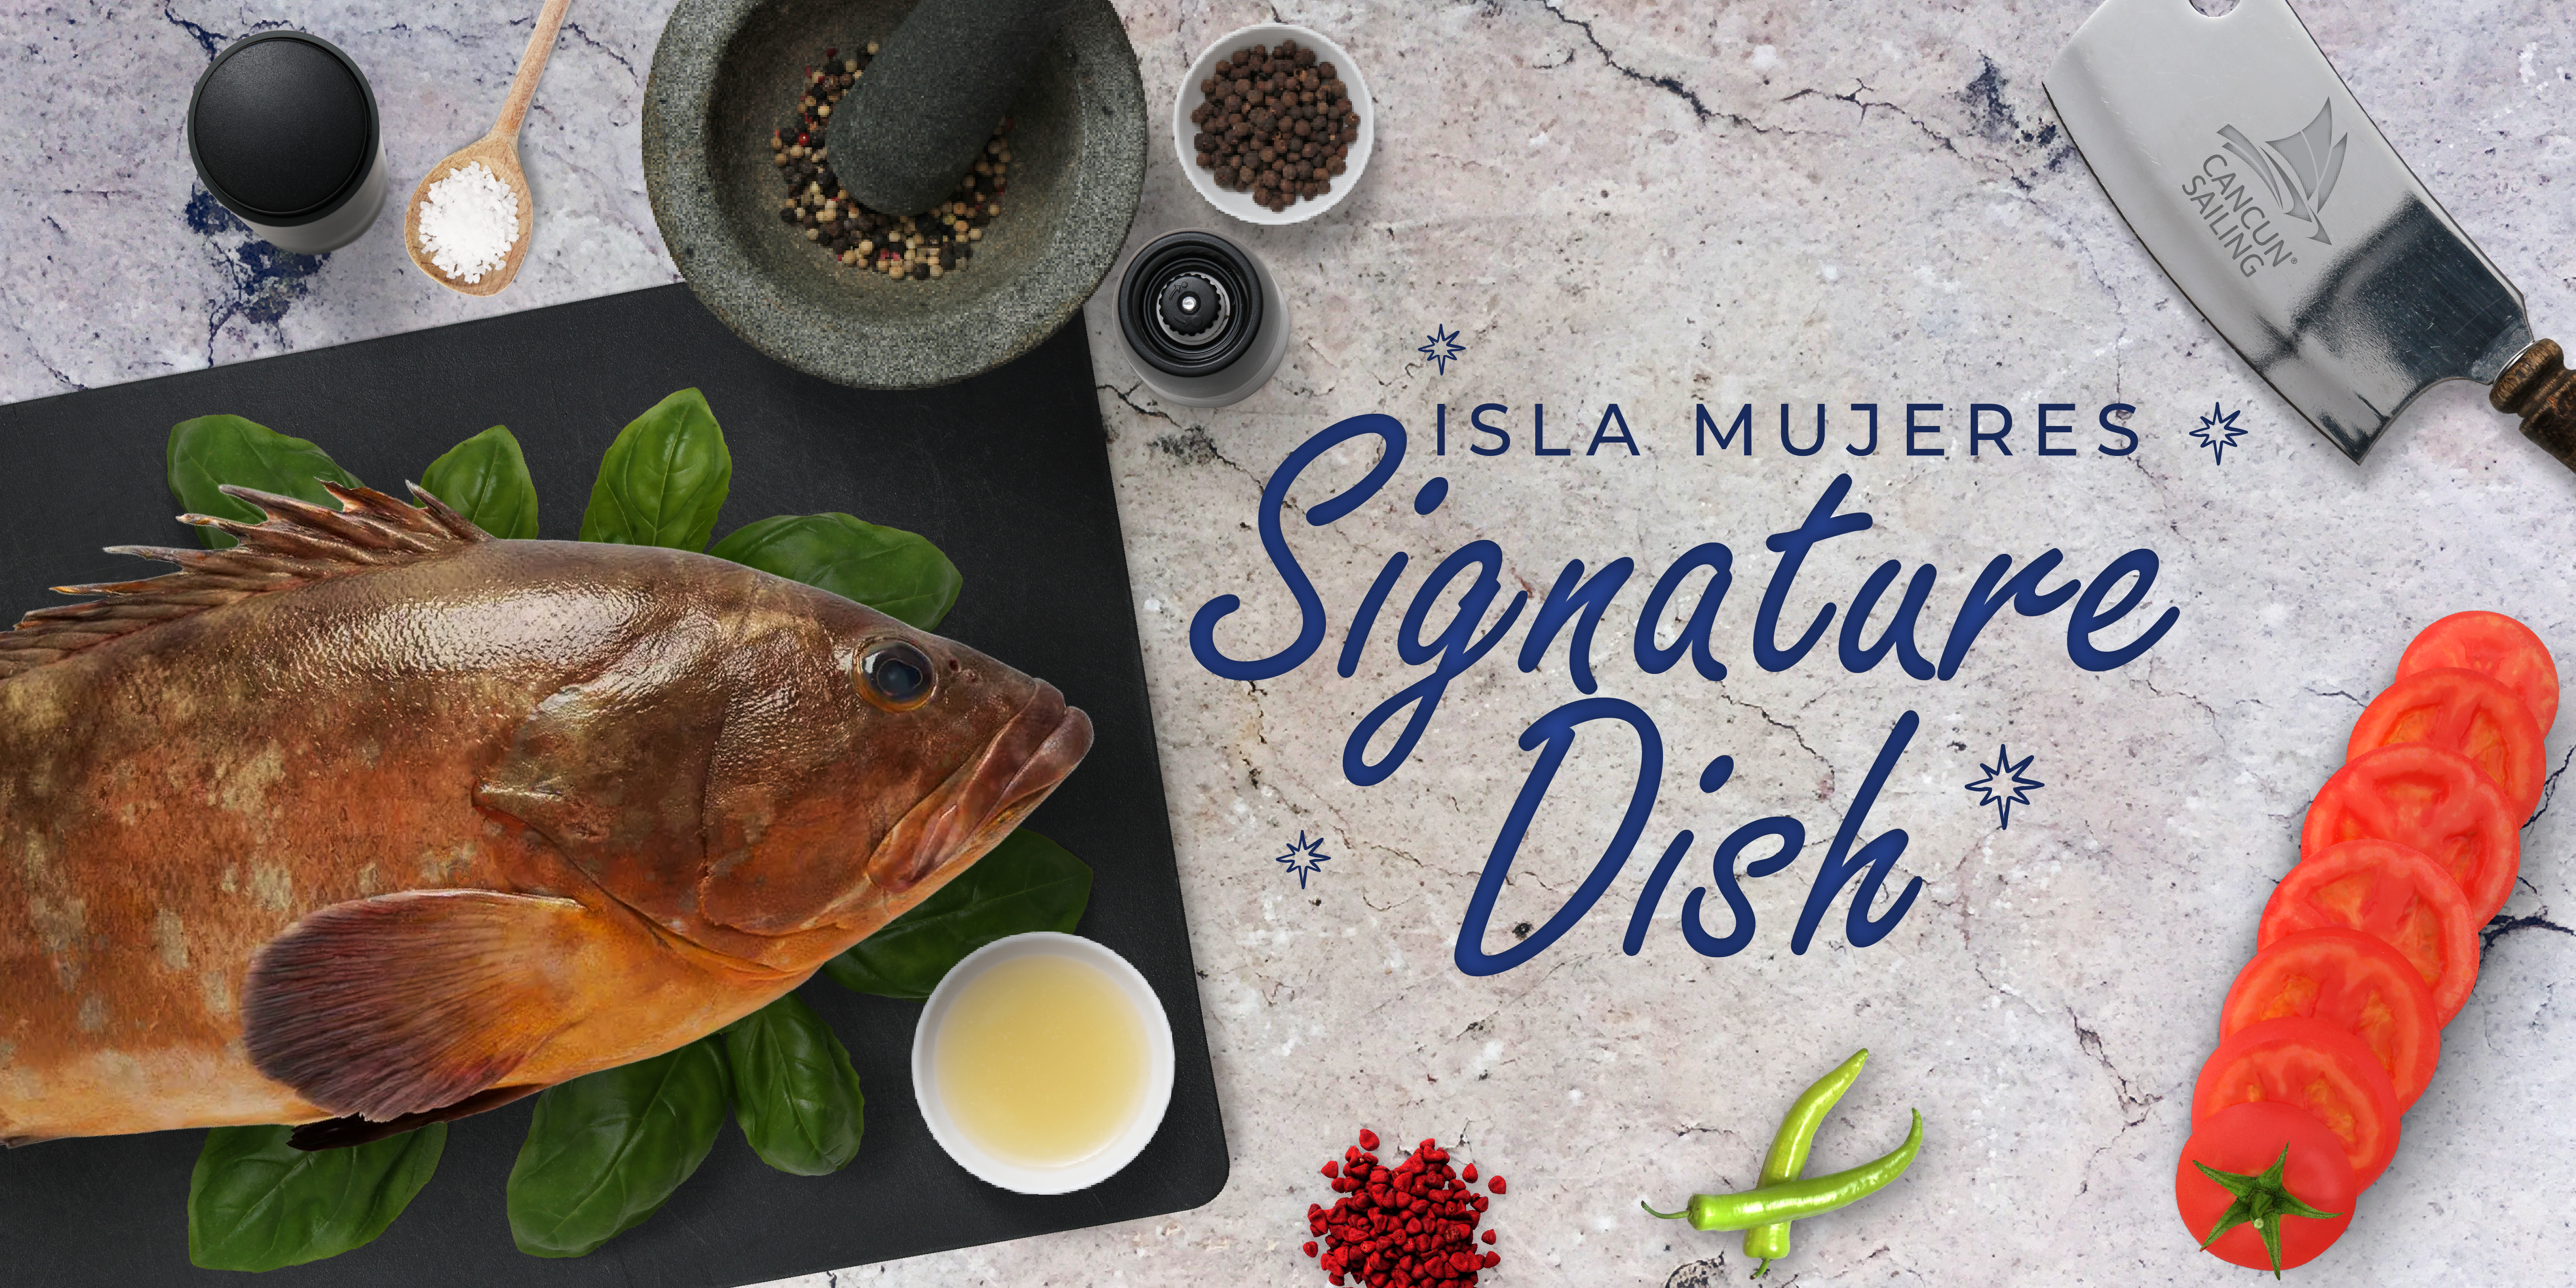 Tikin Xic fish, the best of island food